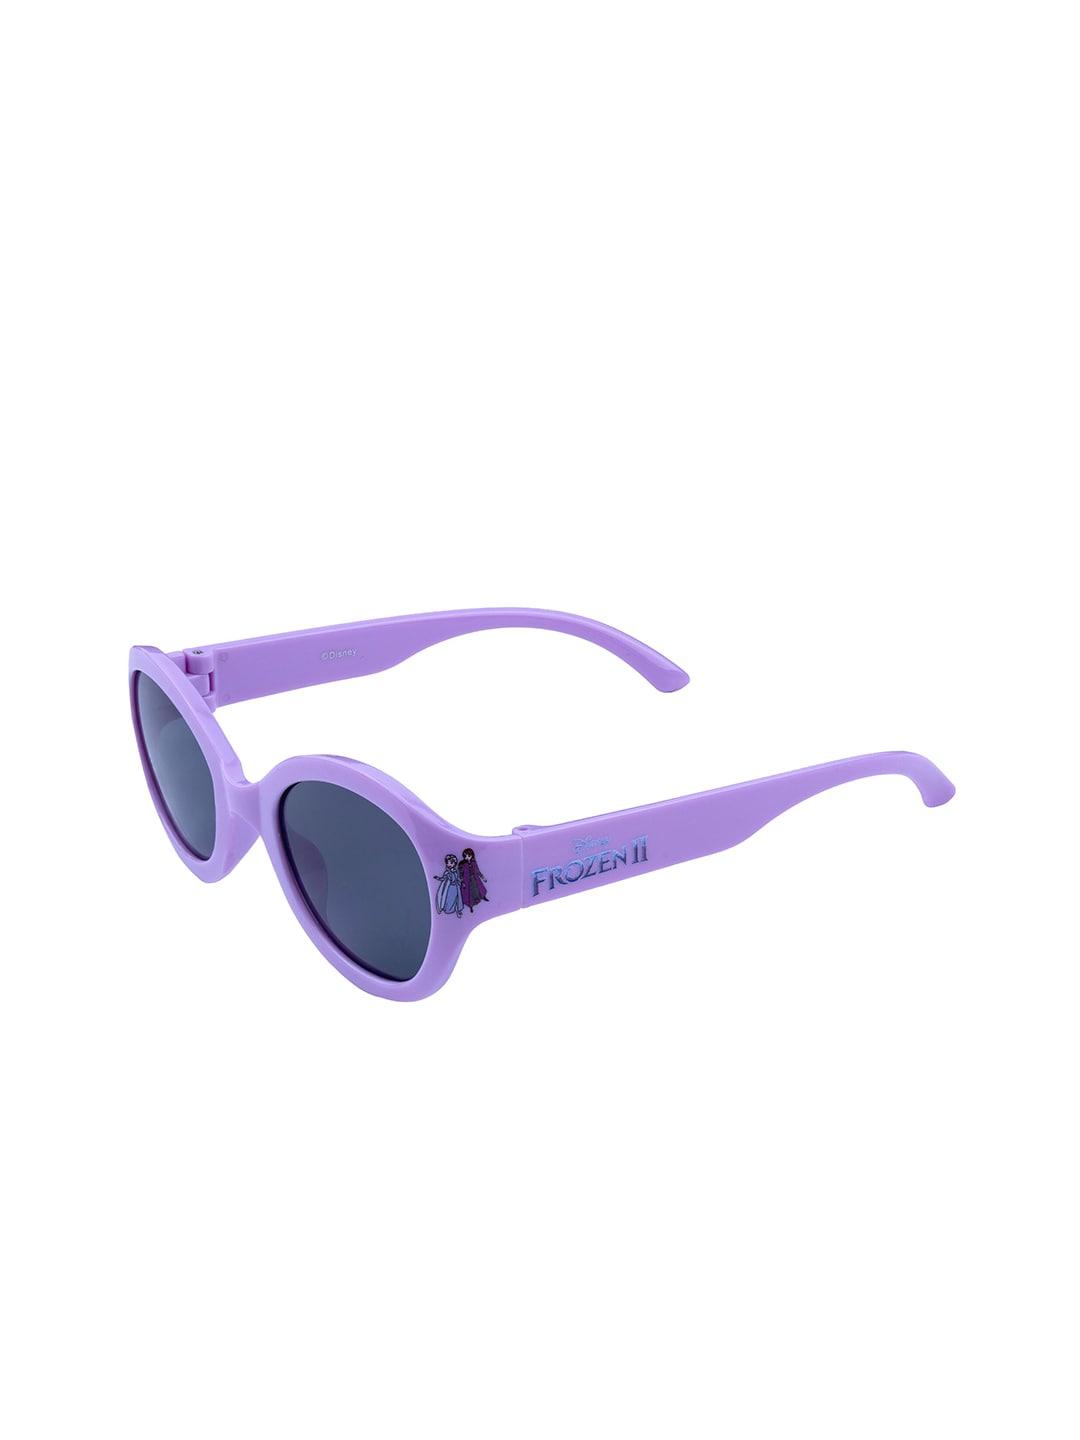 disney girls grey lens & purple oval sunglasses polarised and uv protected lens trha15212